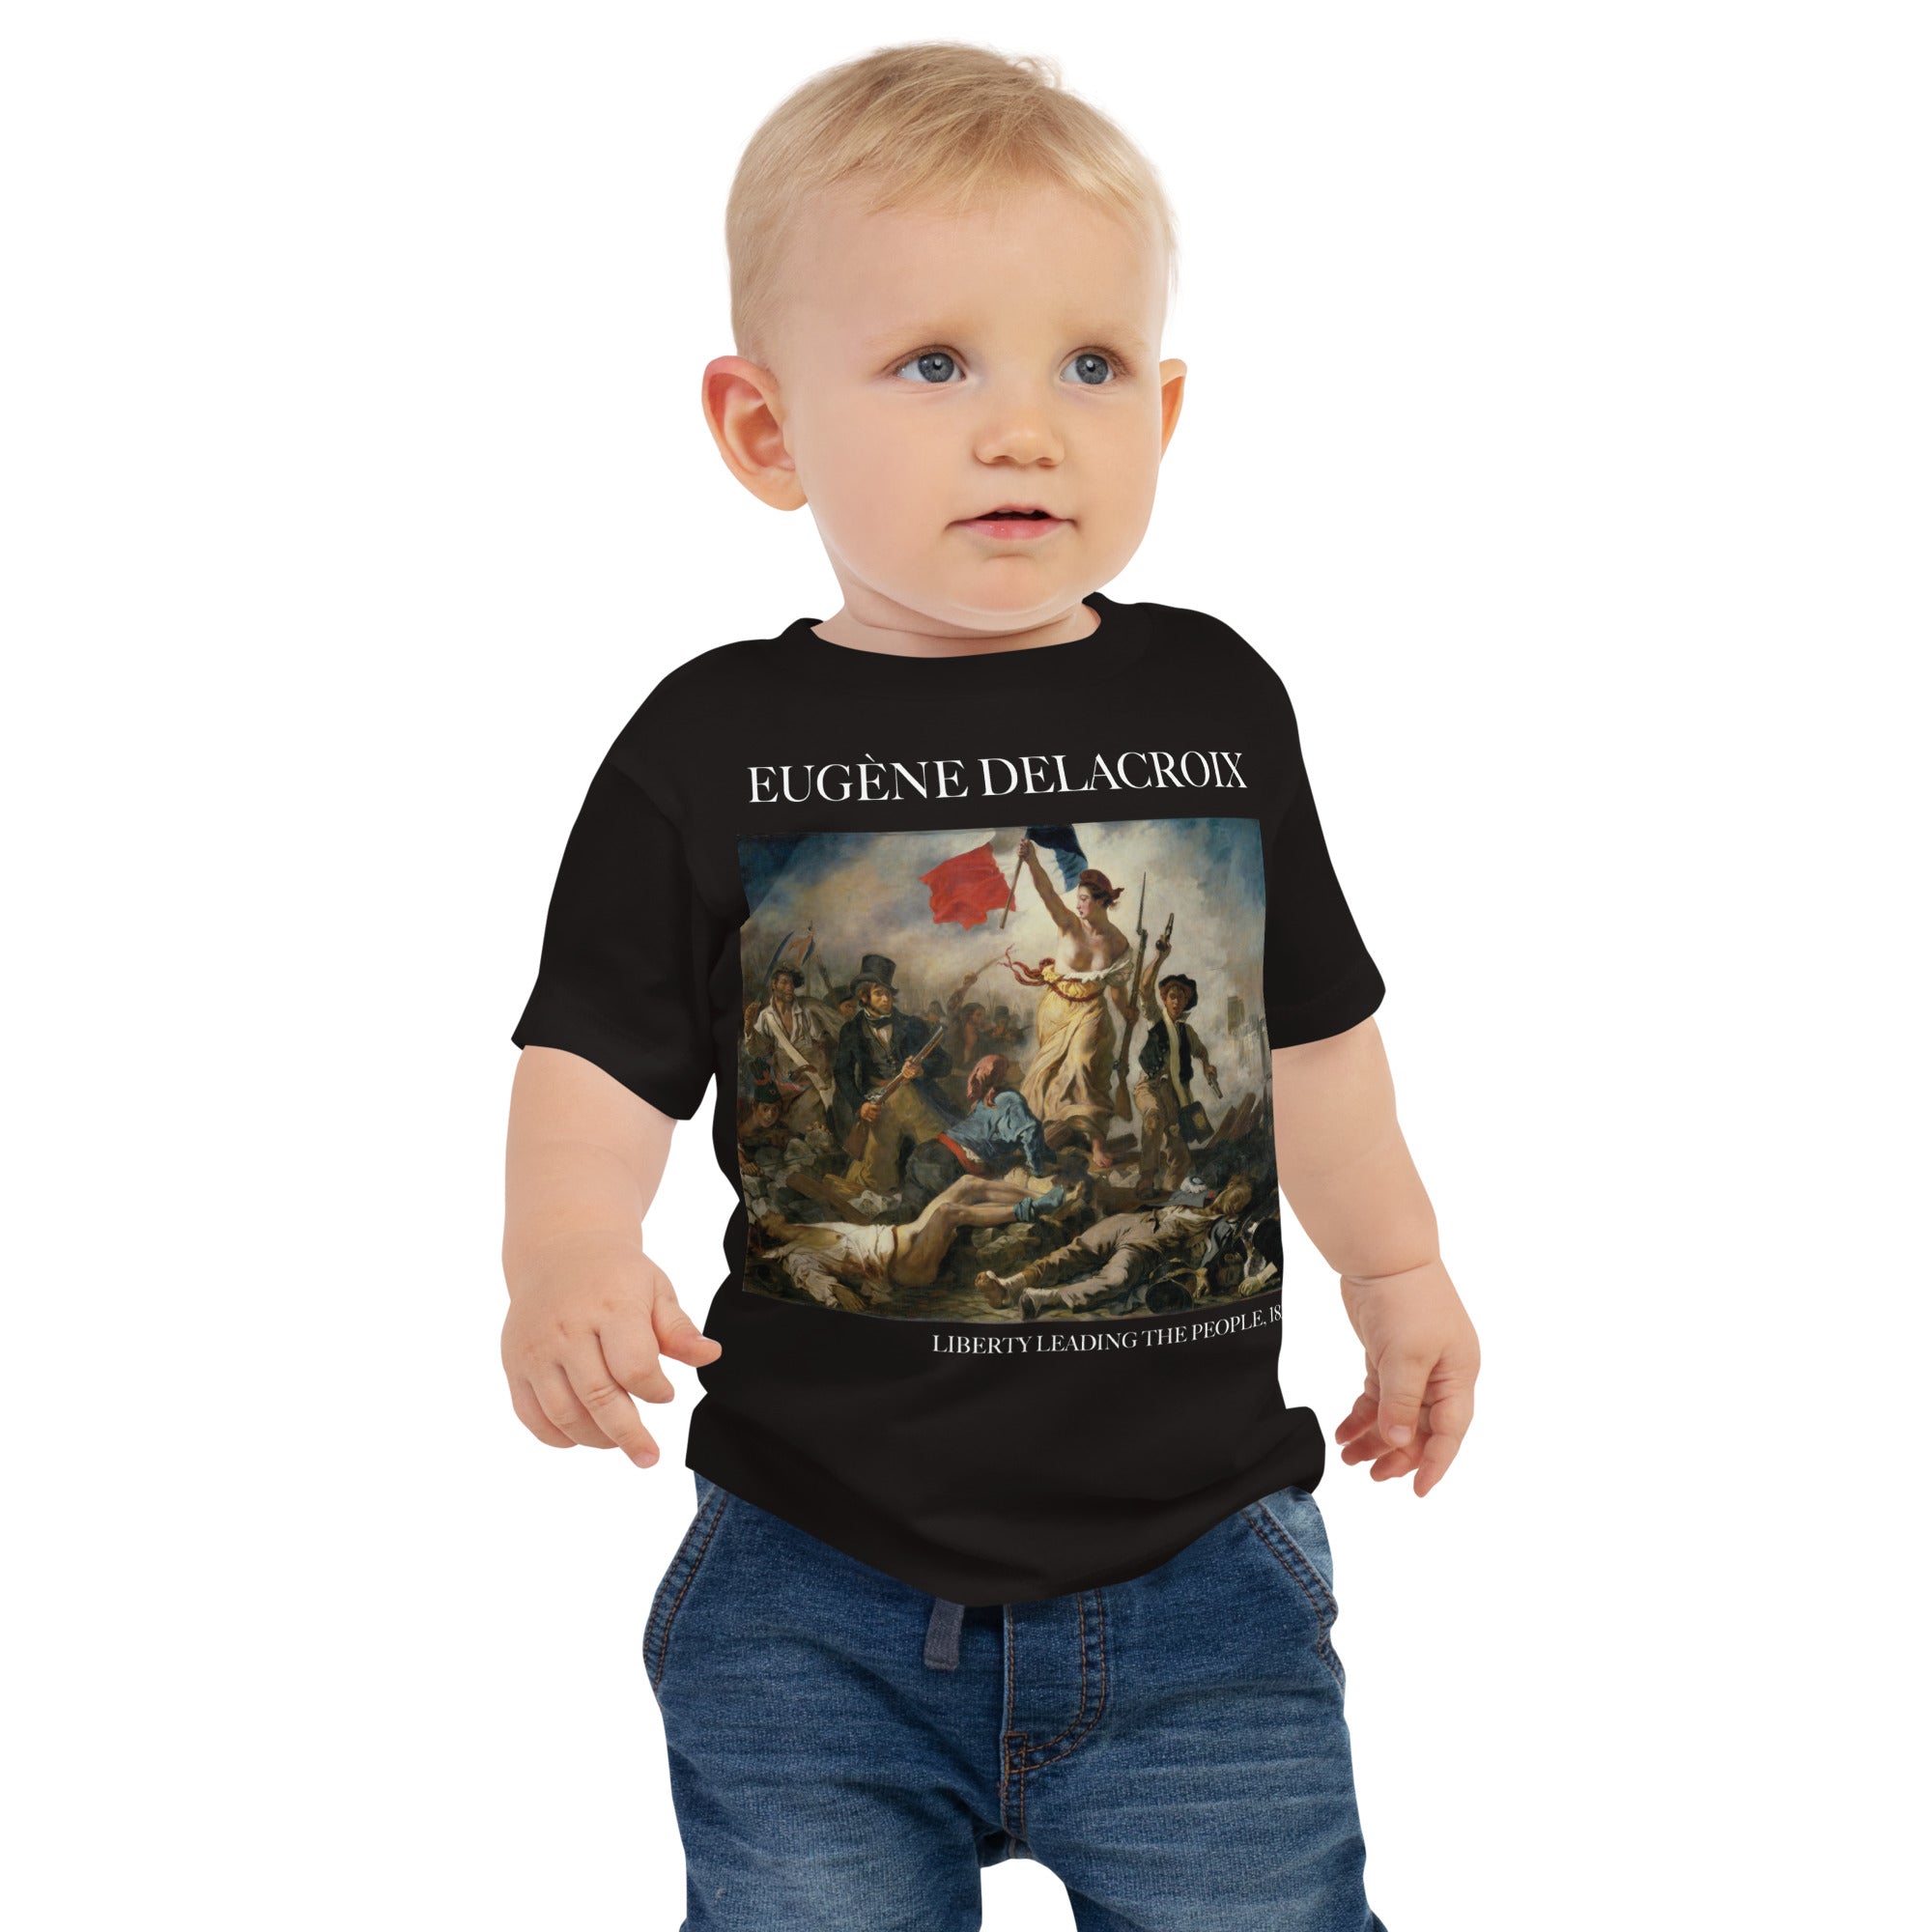 Eugène Delacroix 'Liberty Leading the People' Famous Painting Baby Staple T-Shirt | Premium Baby Art Tee